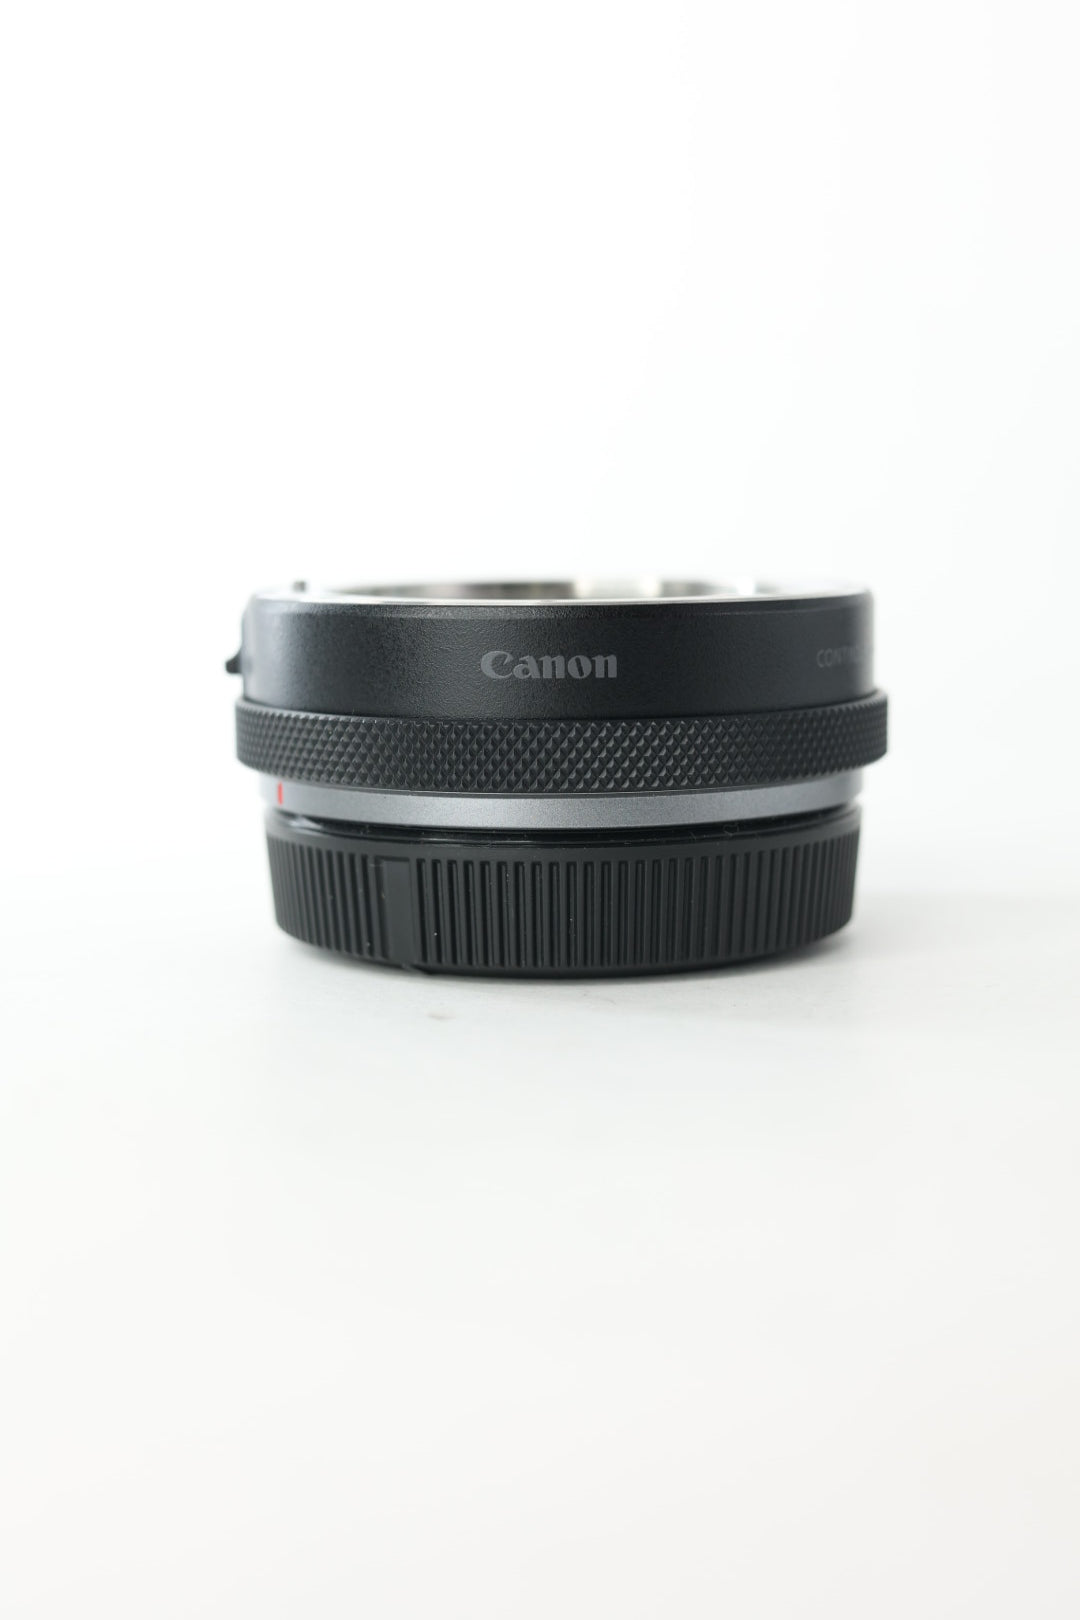 Canon CTRLRINGEFEOSR/02600 Control Ring Mount Adapter EF-EOS R, Used